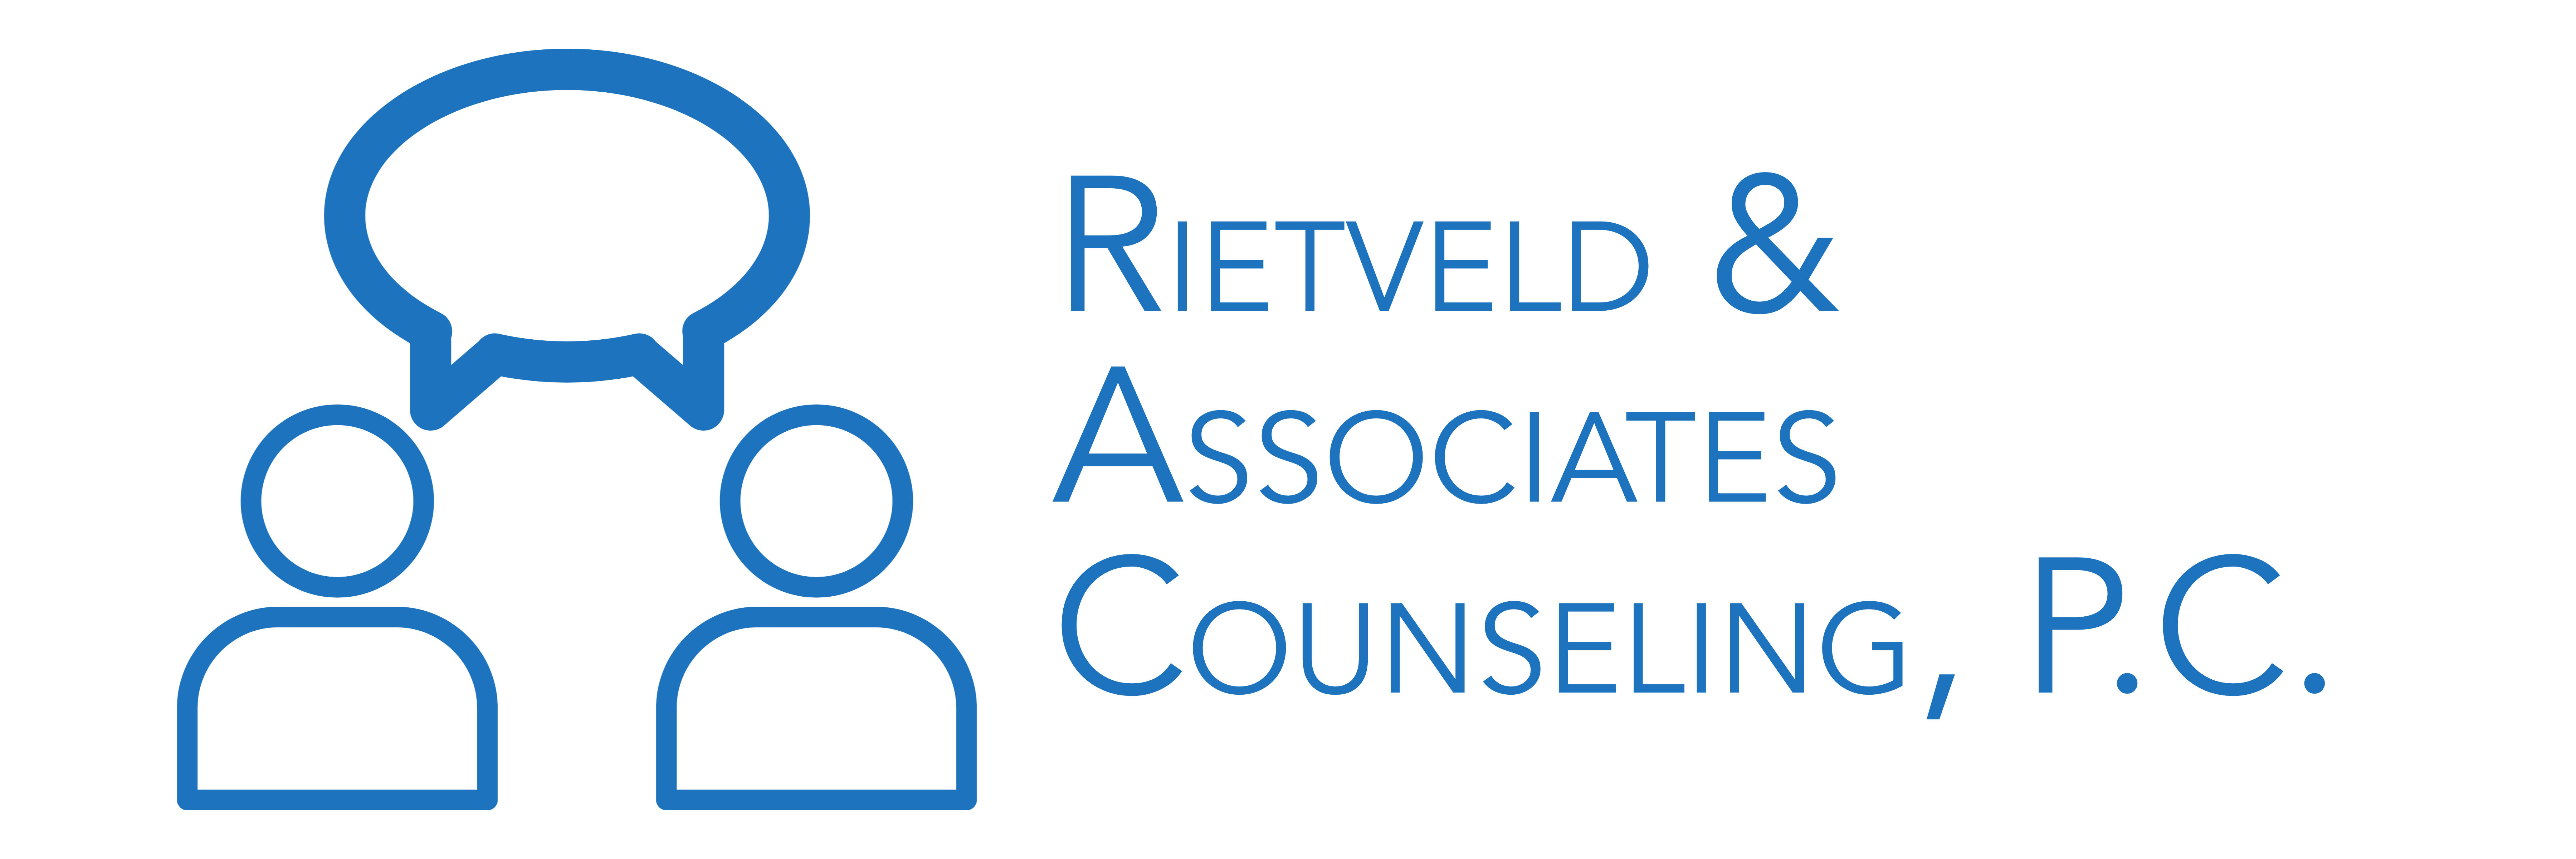 Rietveld & Associates Counseling, P.C.